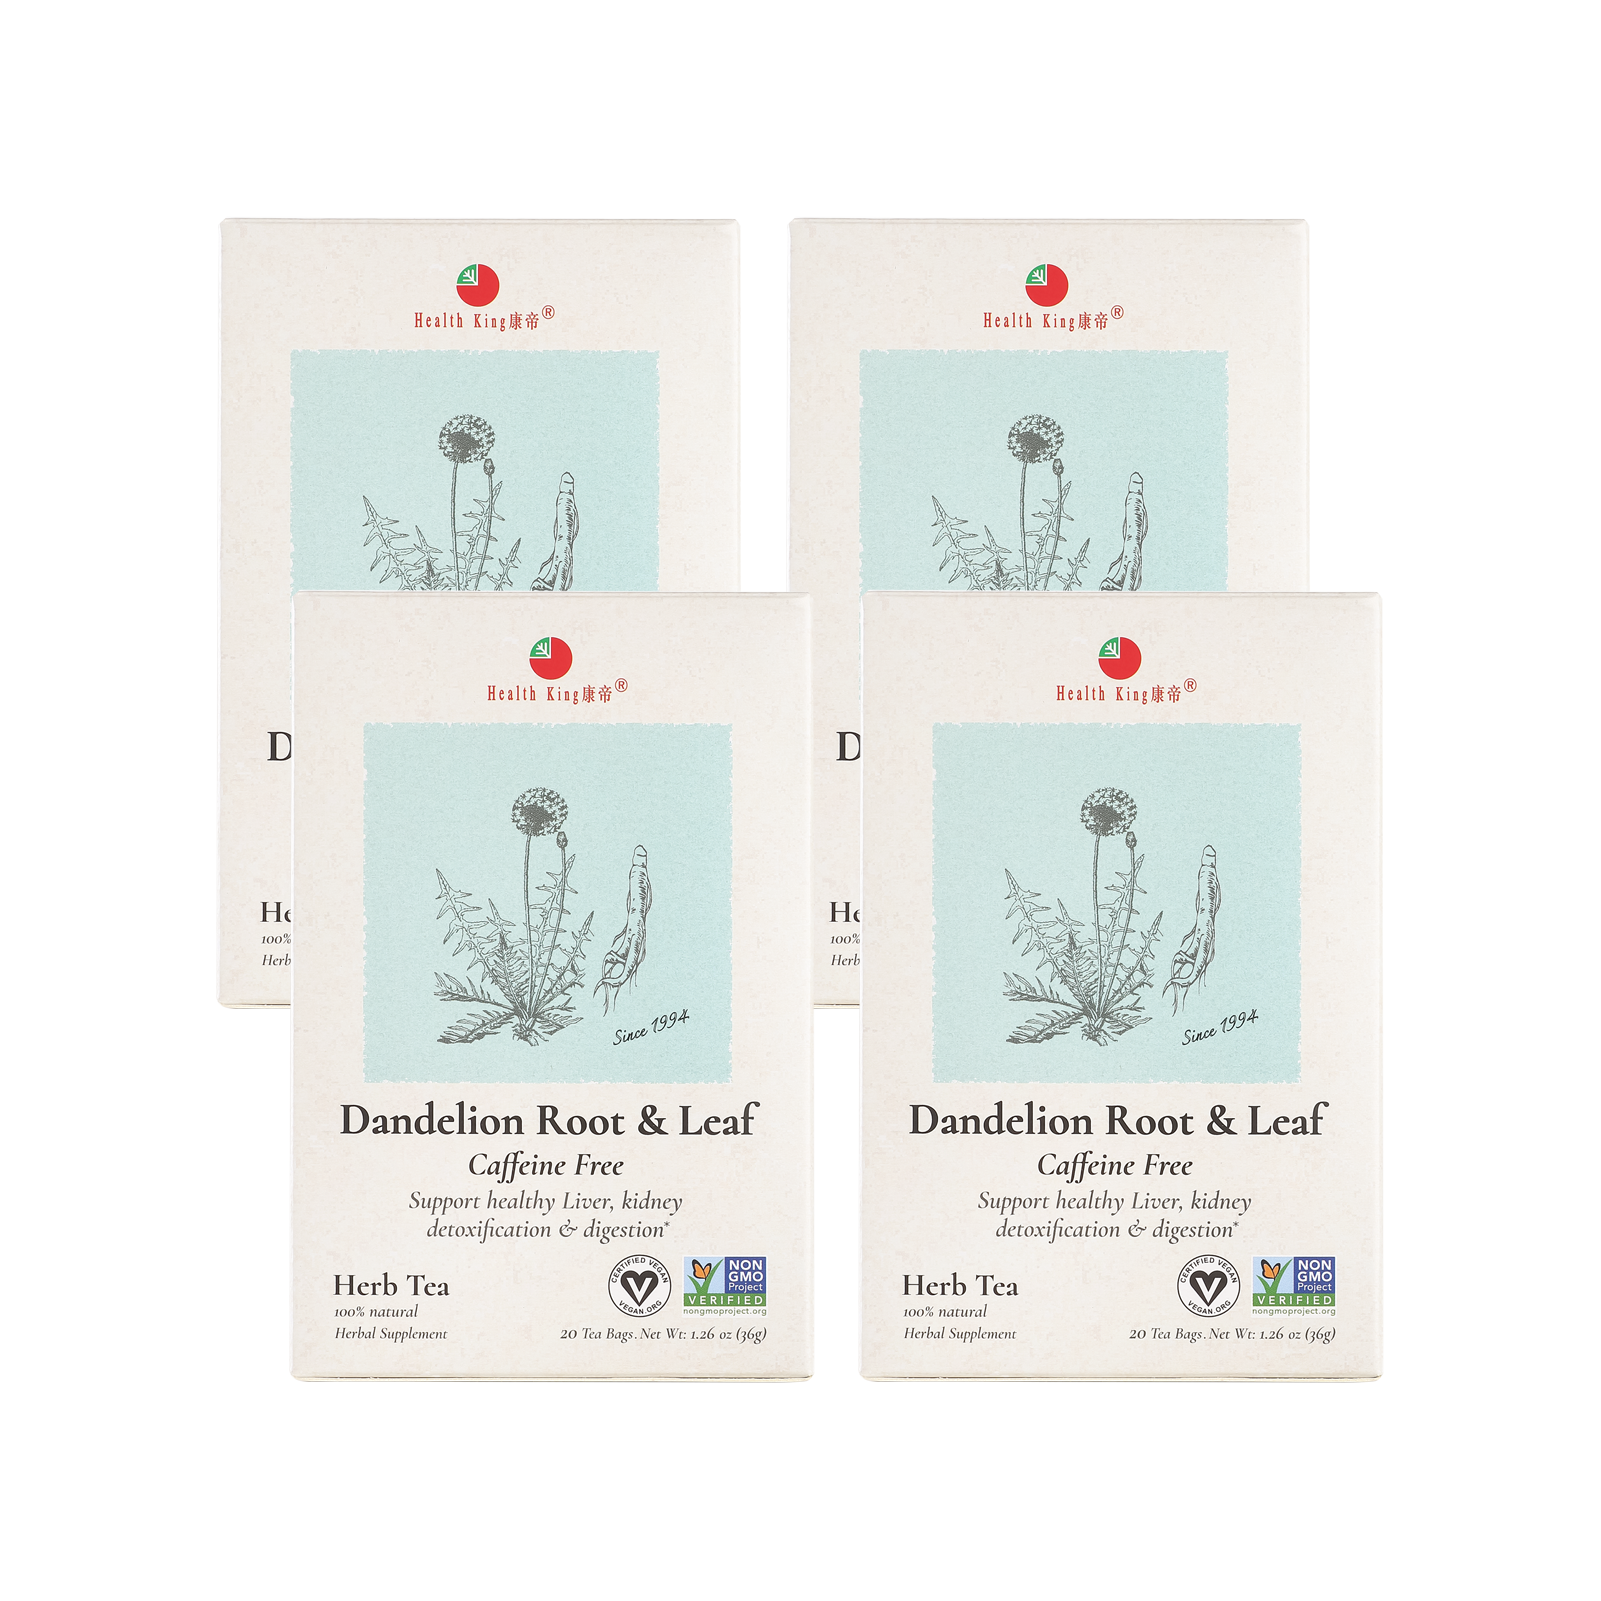 Dandelion Root & Leaf Herb Tea  | Detoxification & Digestion - Health King